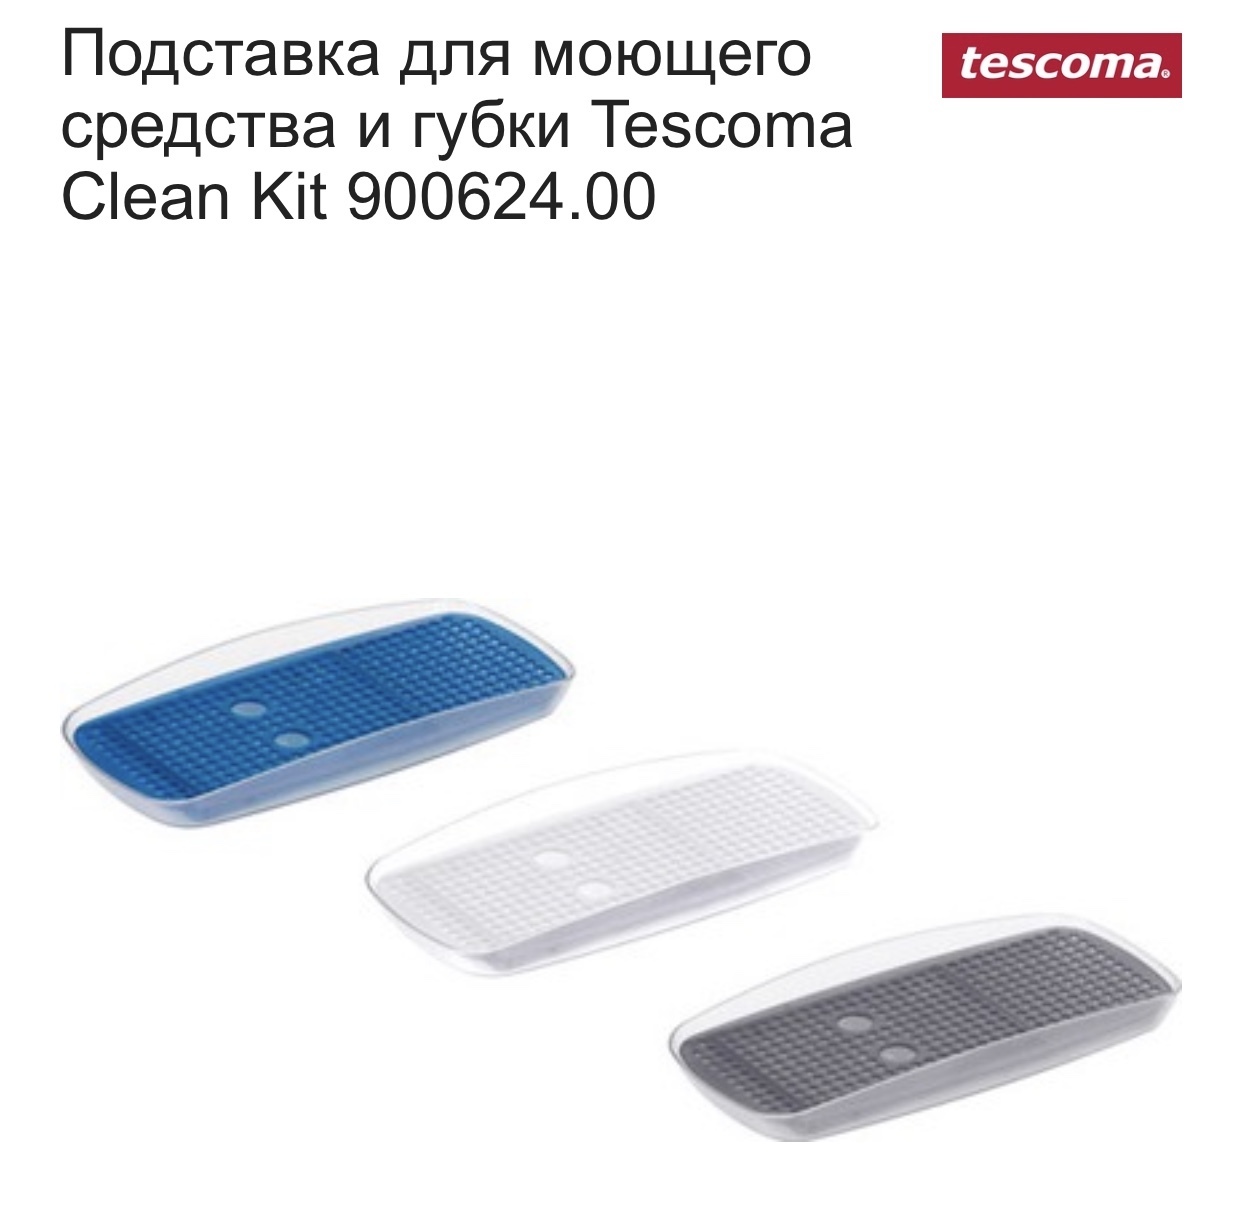 вешалка для салфетки tescoma clean kit